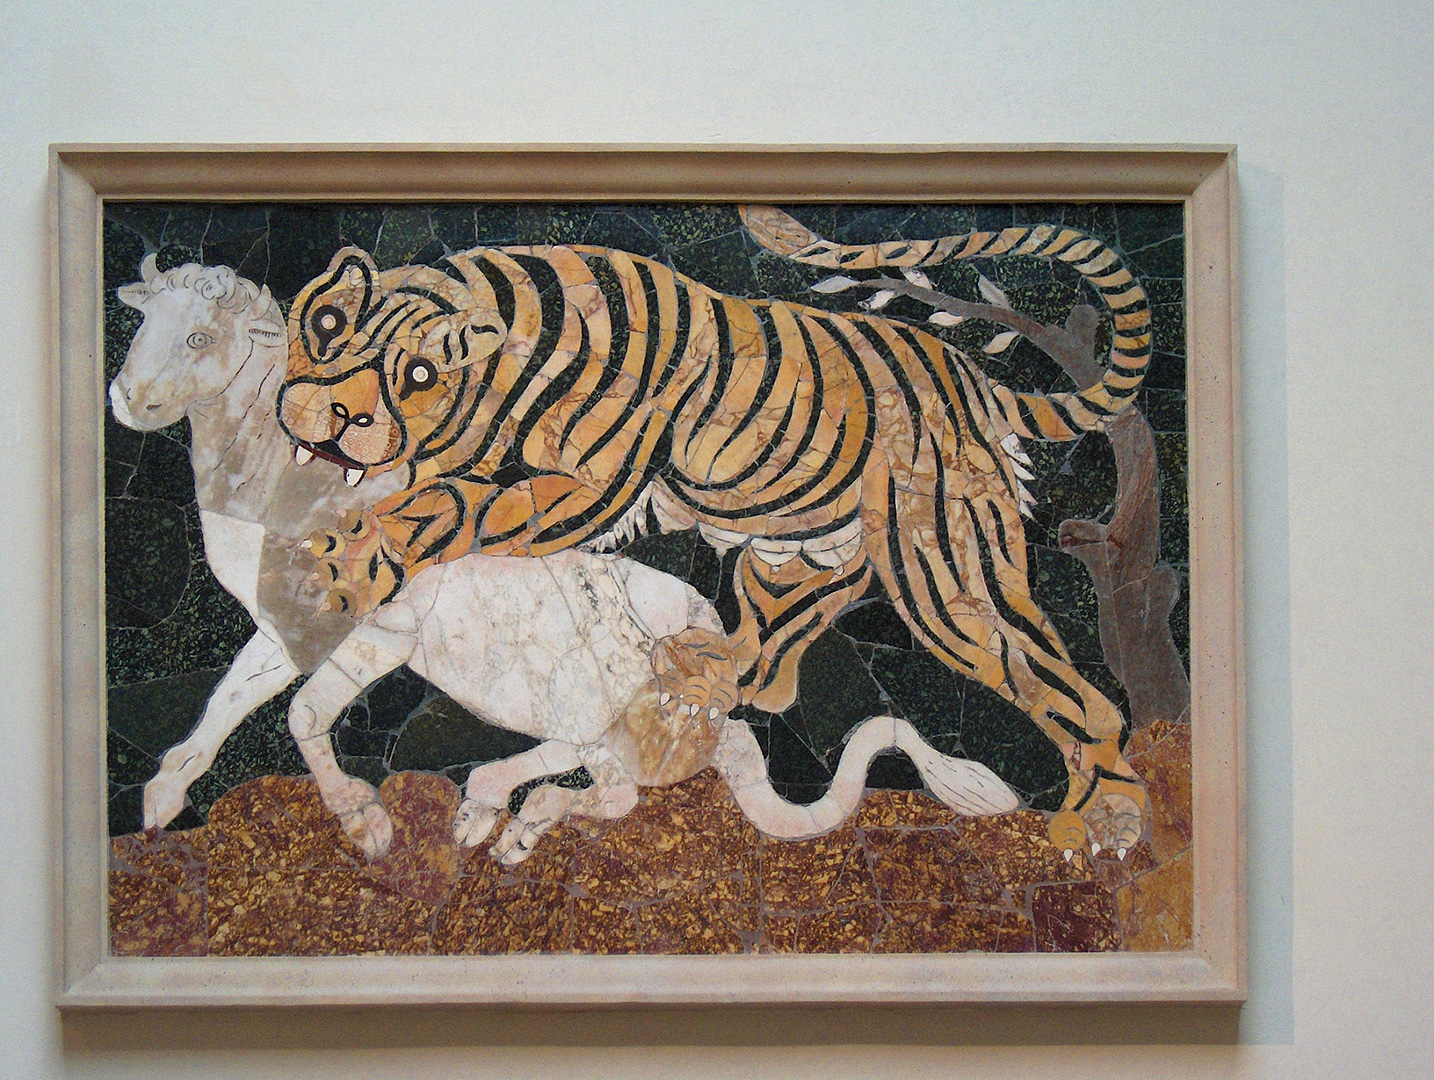 Tijger die kalf aanvalt. (Rome), Tiger attacking a calf.